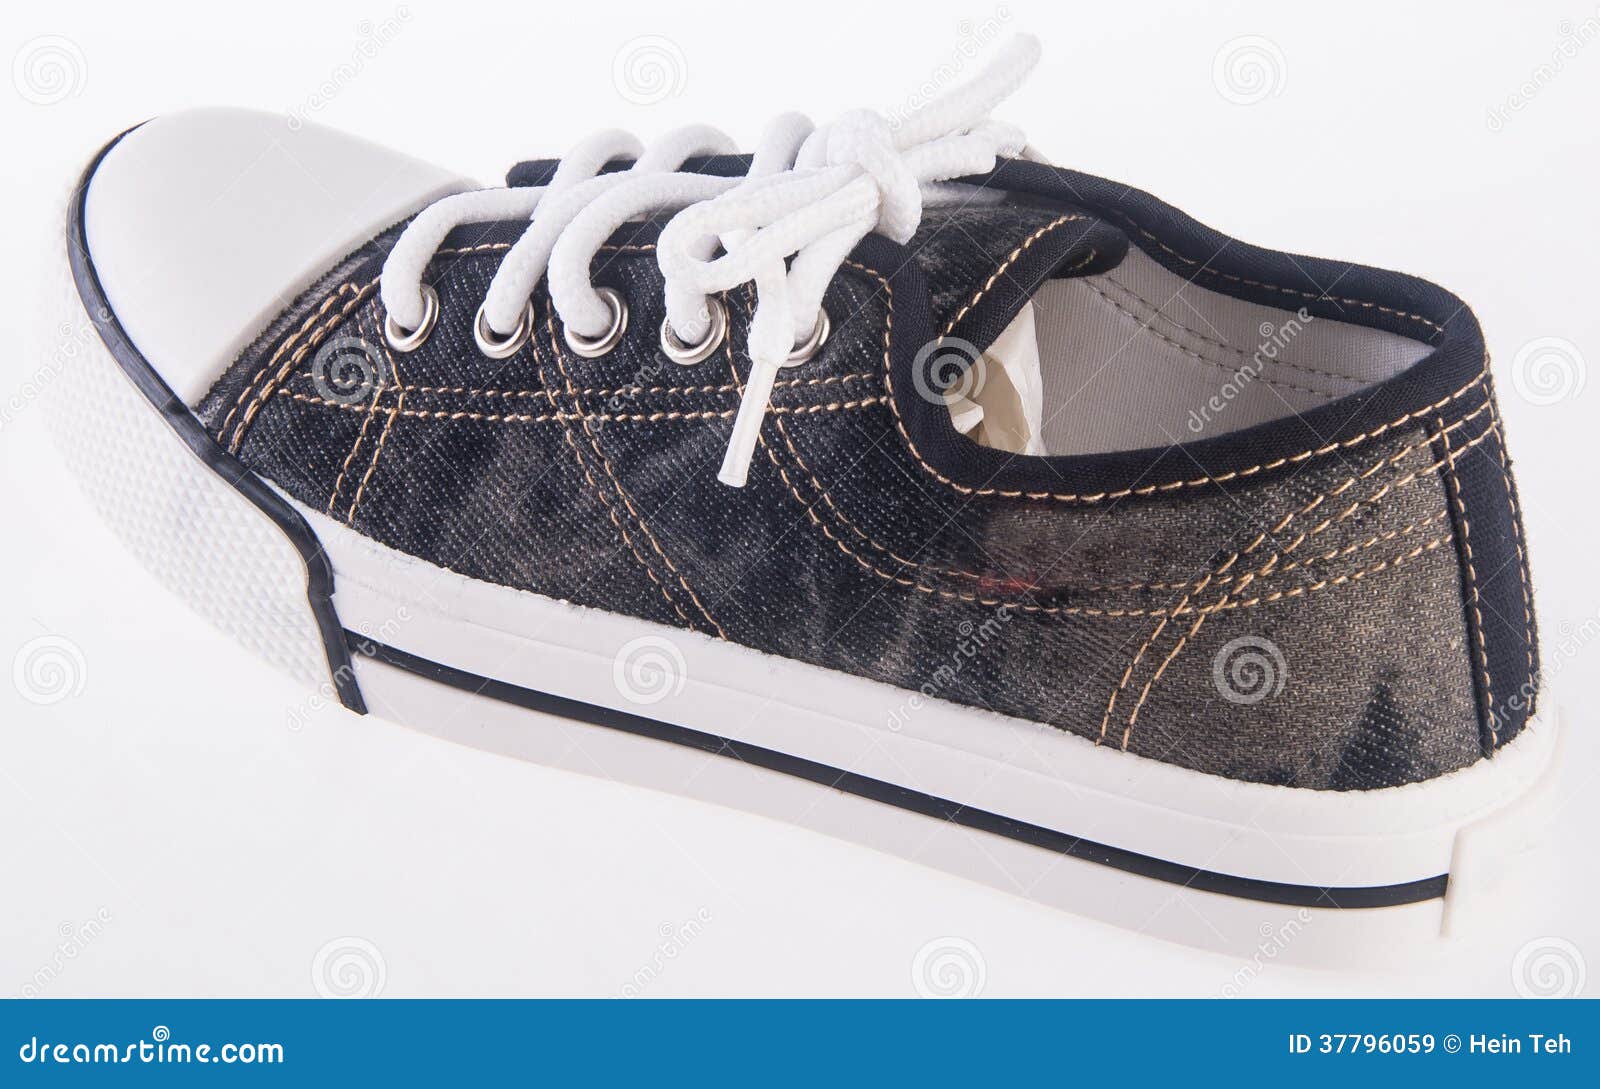 Shoe. Men S Fashion Shoe on a Background Stock Image - Image of ...